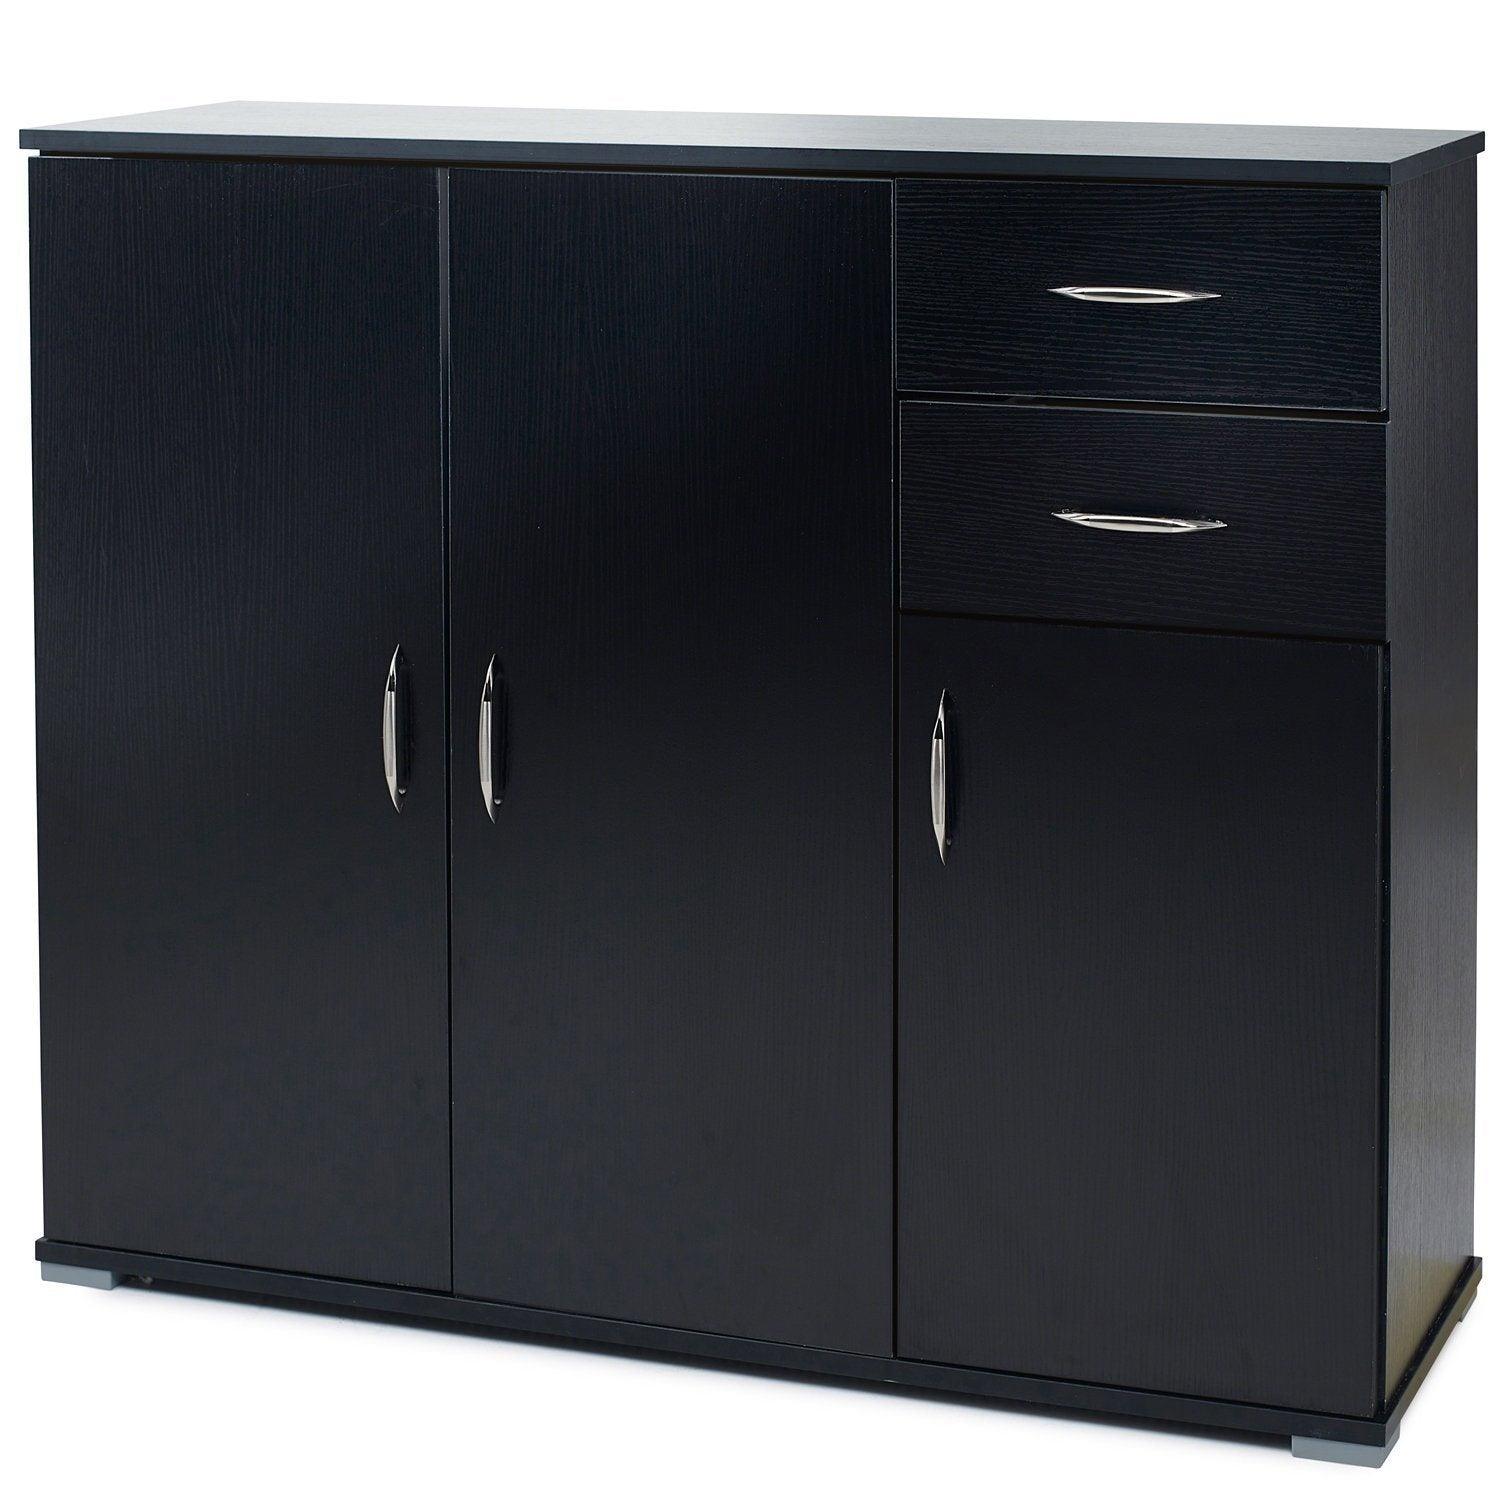 Outlet - Essie - Storage Cabinet - Home Office - Black